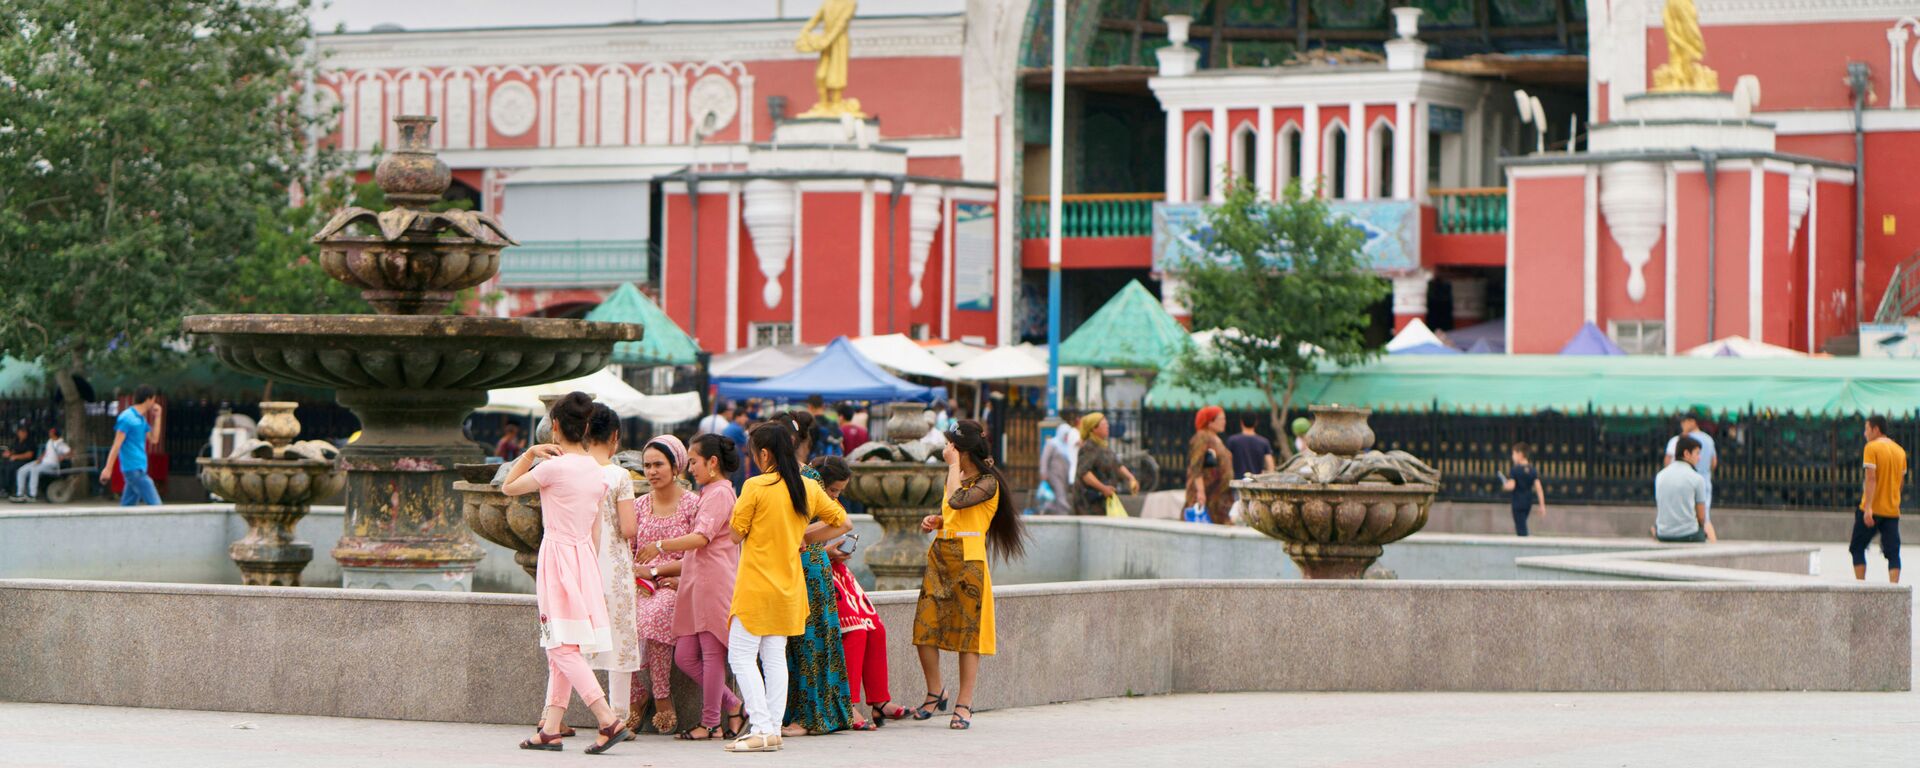 Жители города Худжанд на площади Регистан перед городским рынком Панчанбе - Sputnik Таджикистан, 1920, 29.07.2021